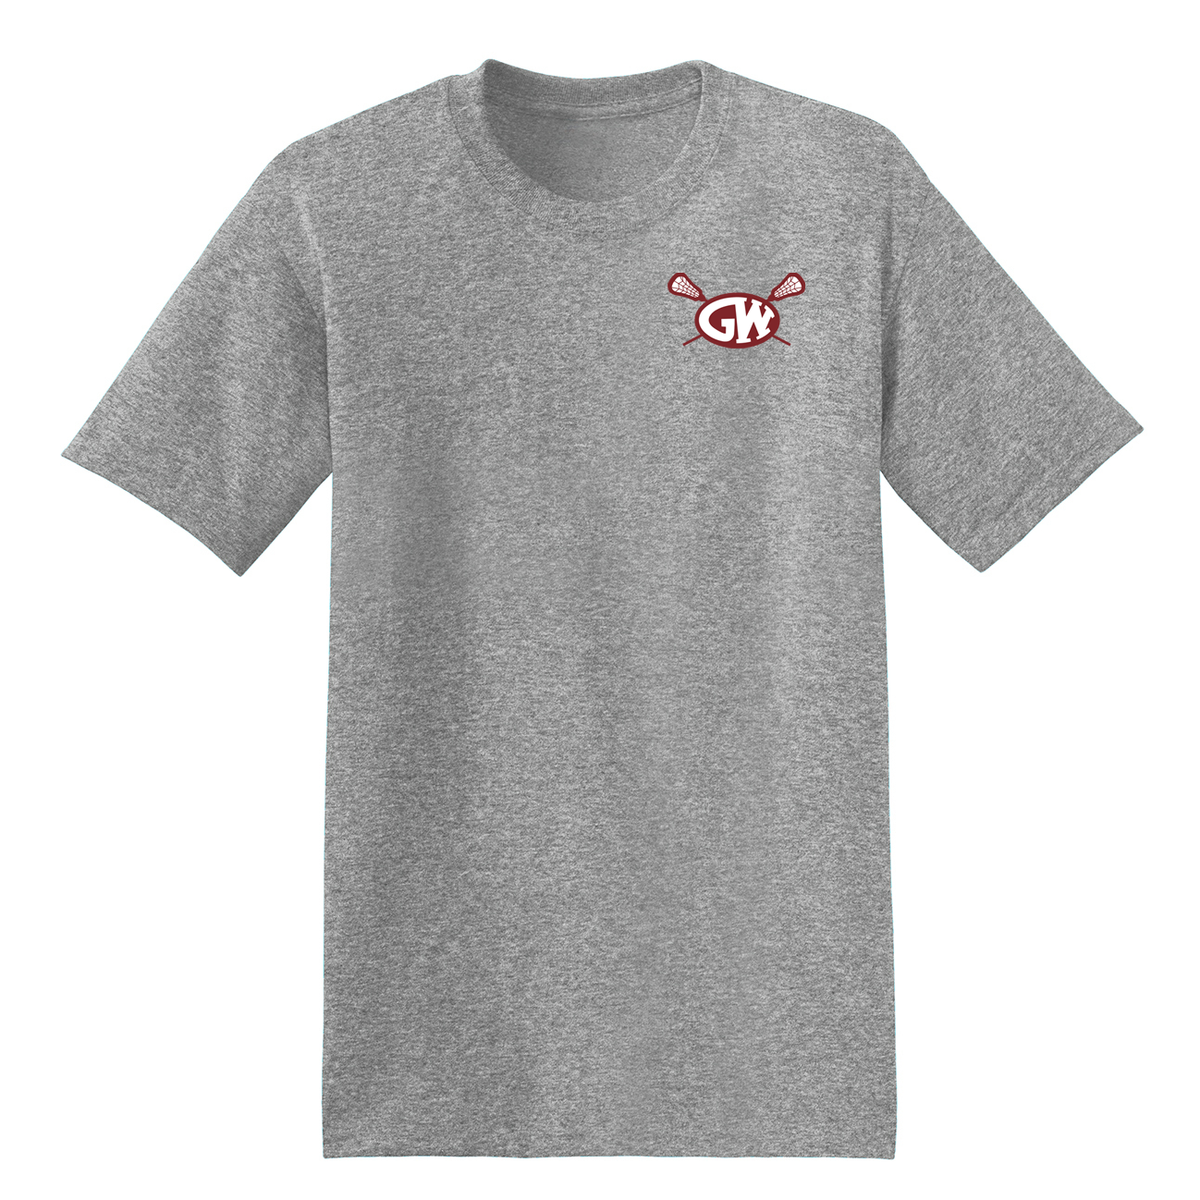 George Washington Lacrosse T-Shirt